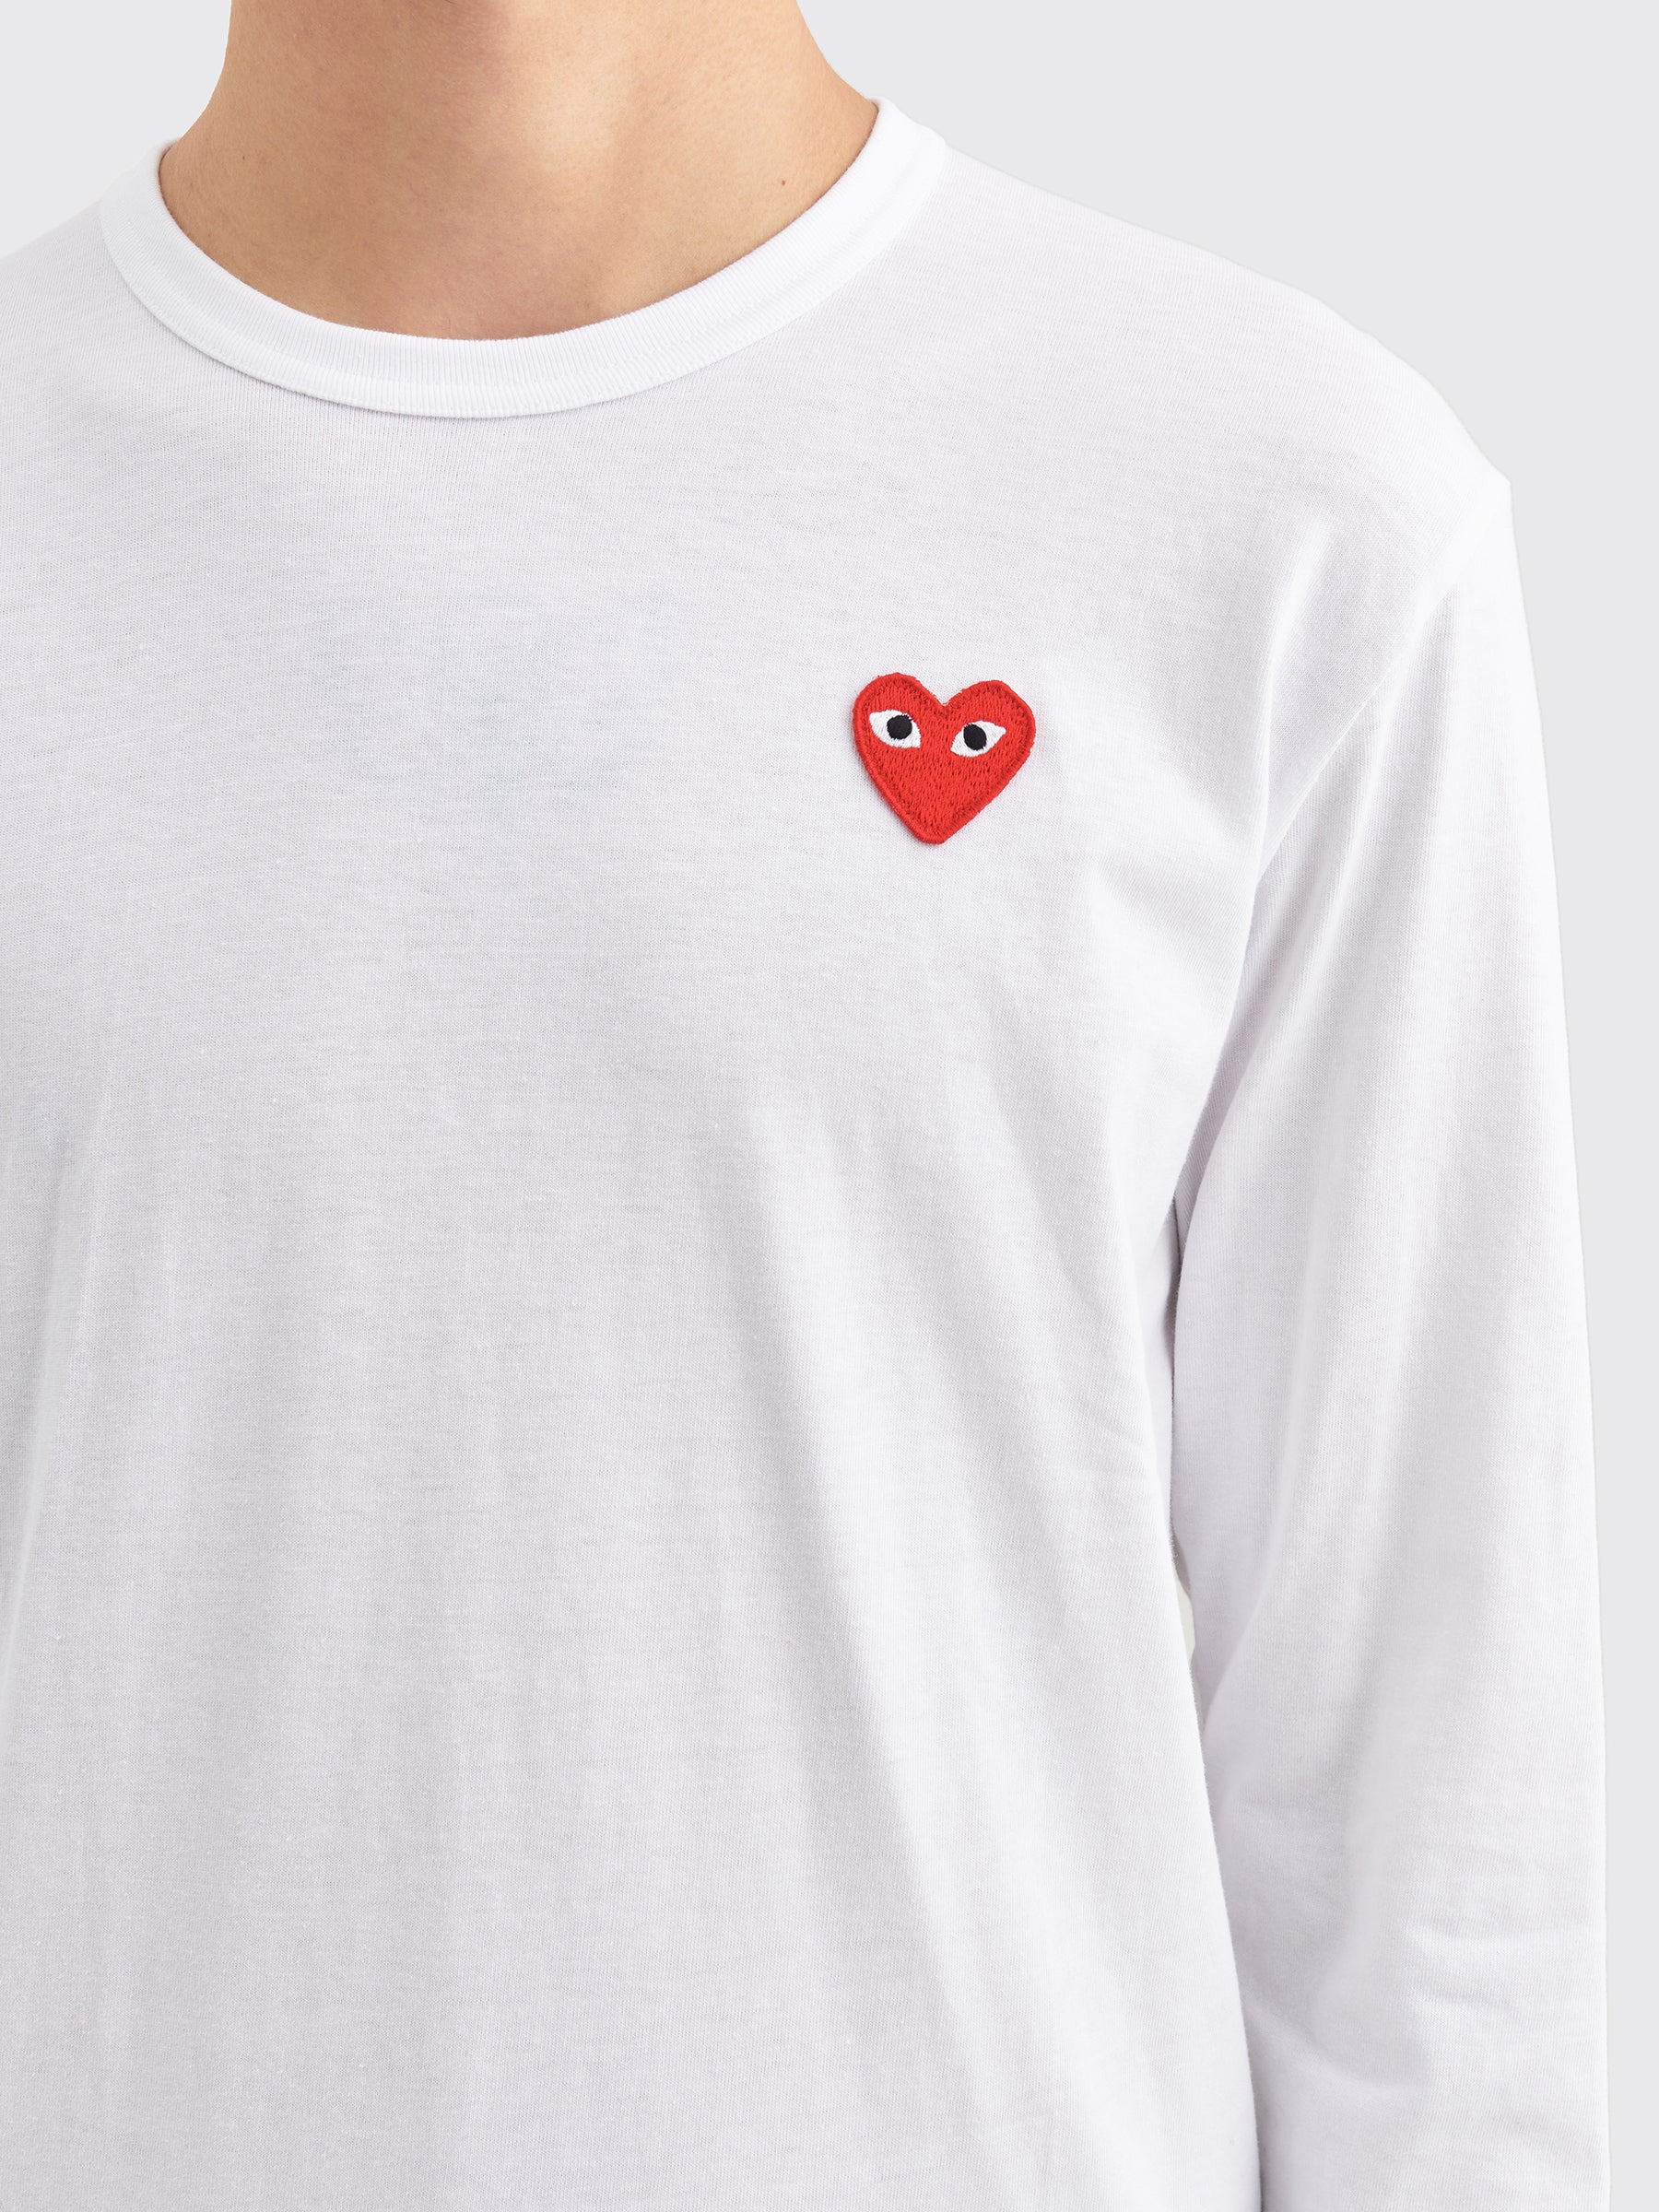 Comme des Garçons Play Small Heart LS T-shirt White Red